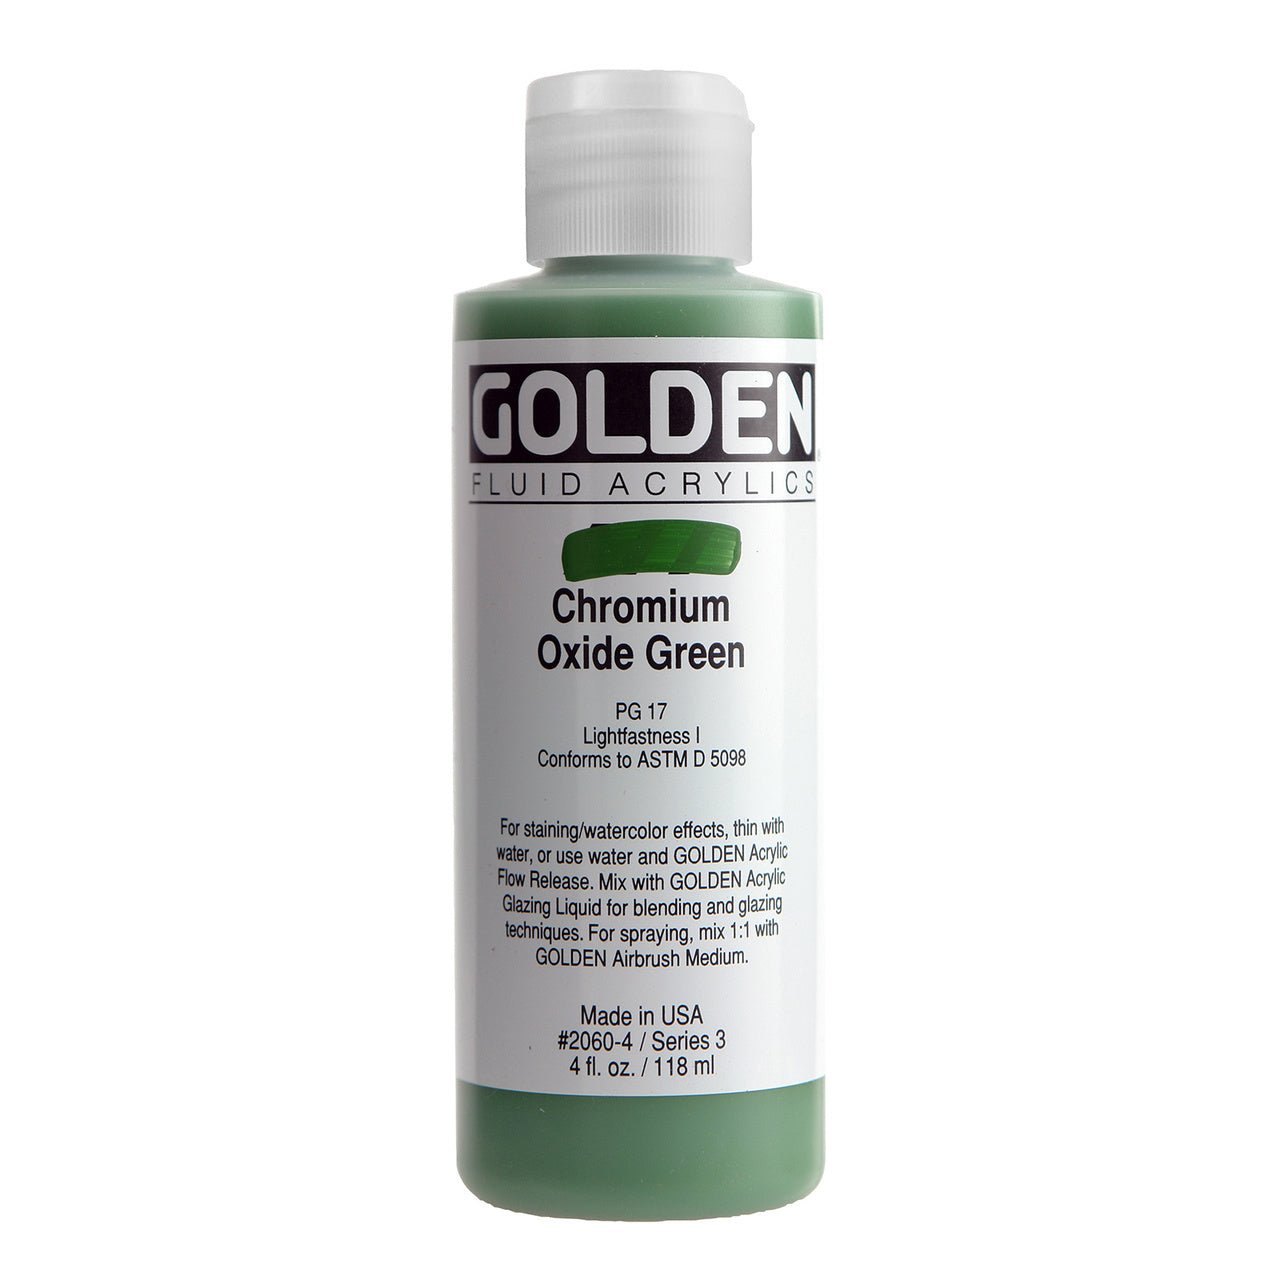 Golden Fluid Acrylic Chromium Oxide Green 4 oz - merriartist.com